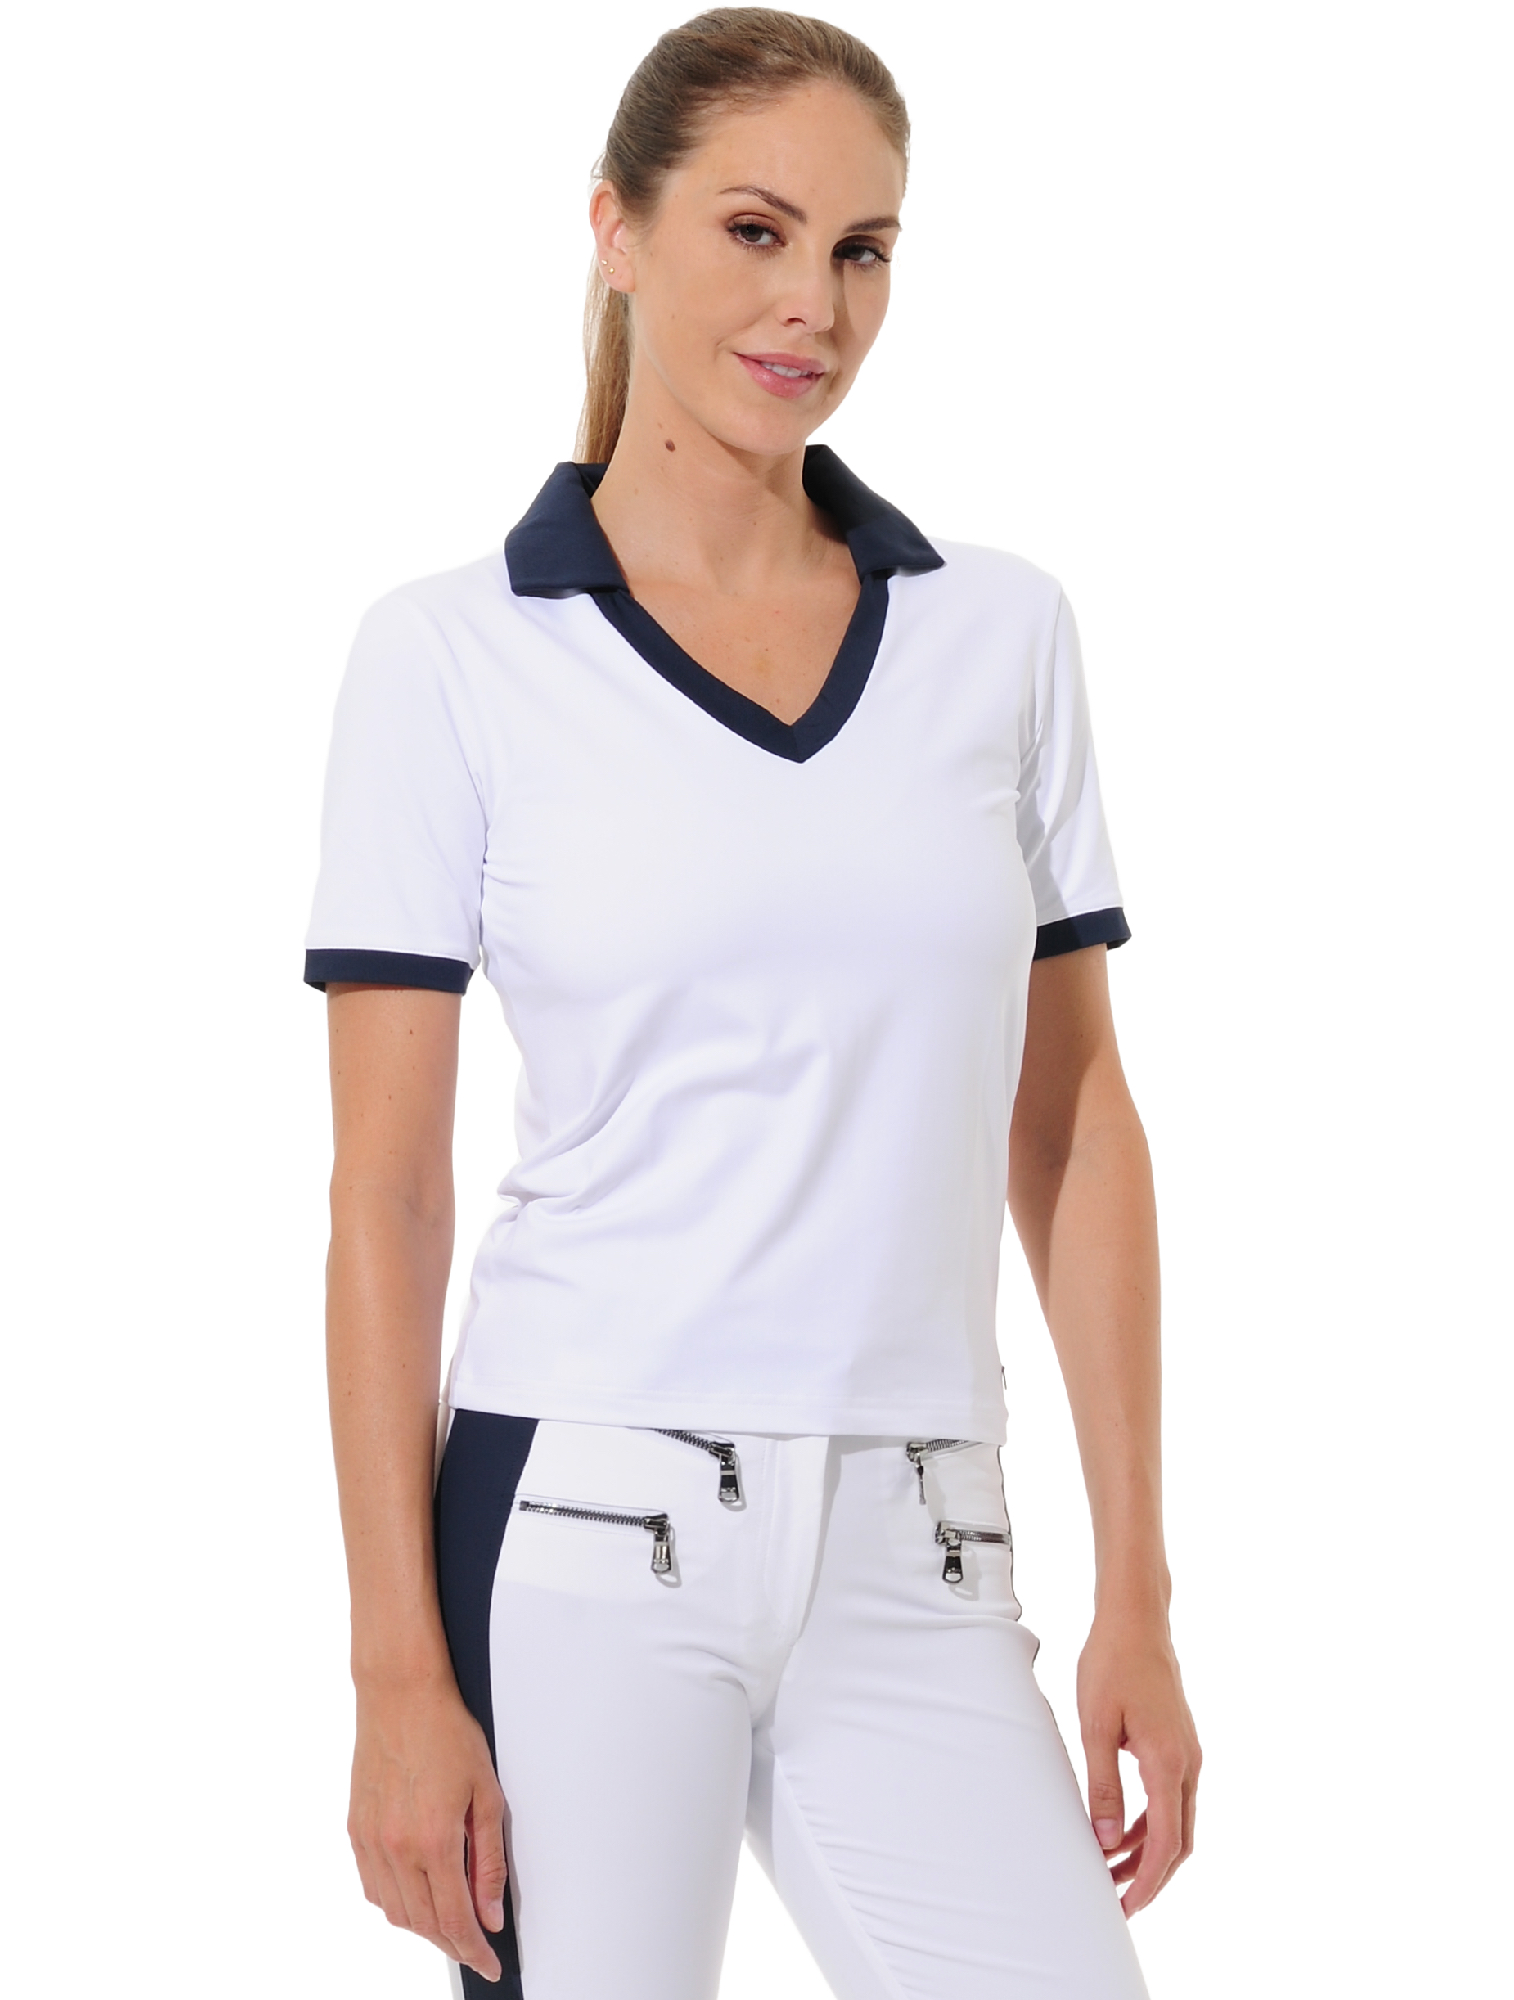 Jersey Golf Poloshirt white/navy